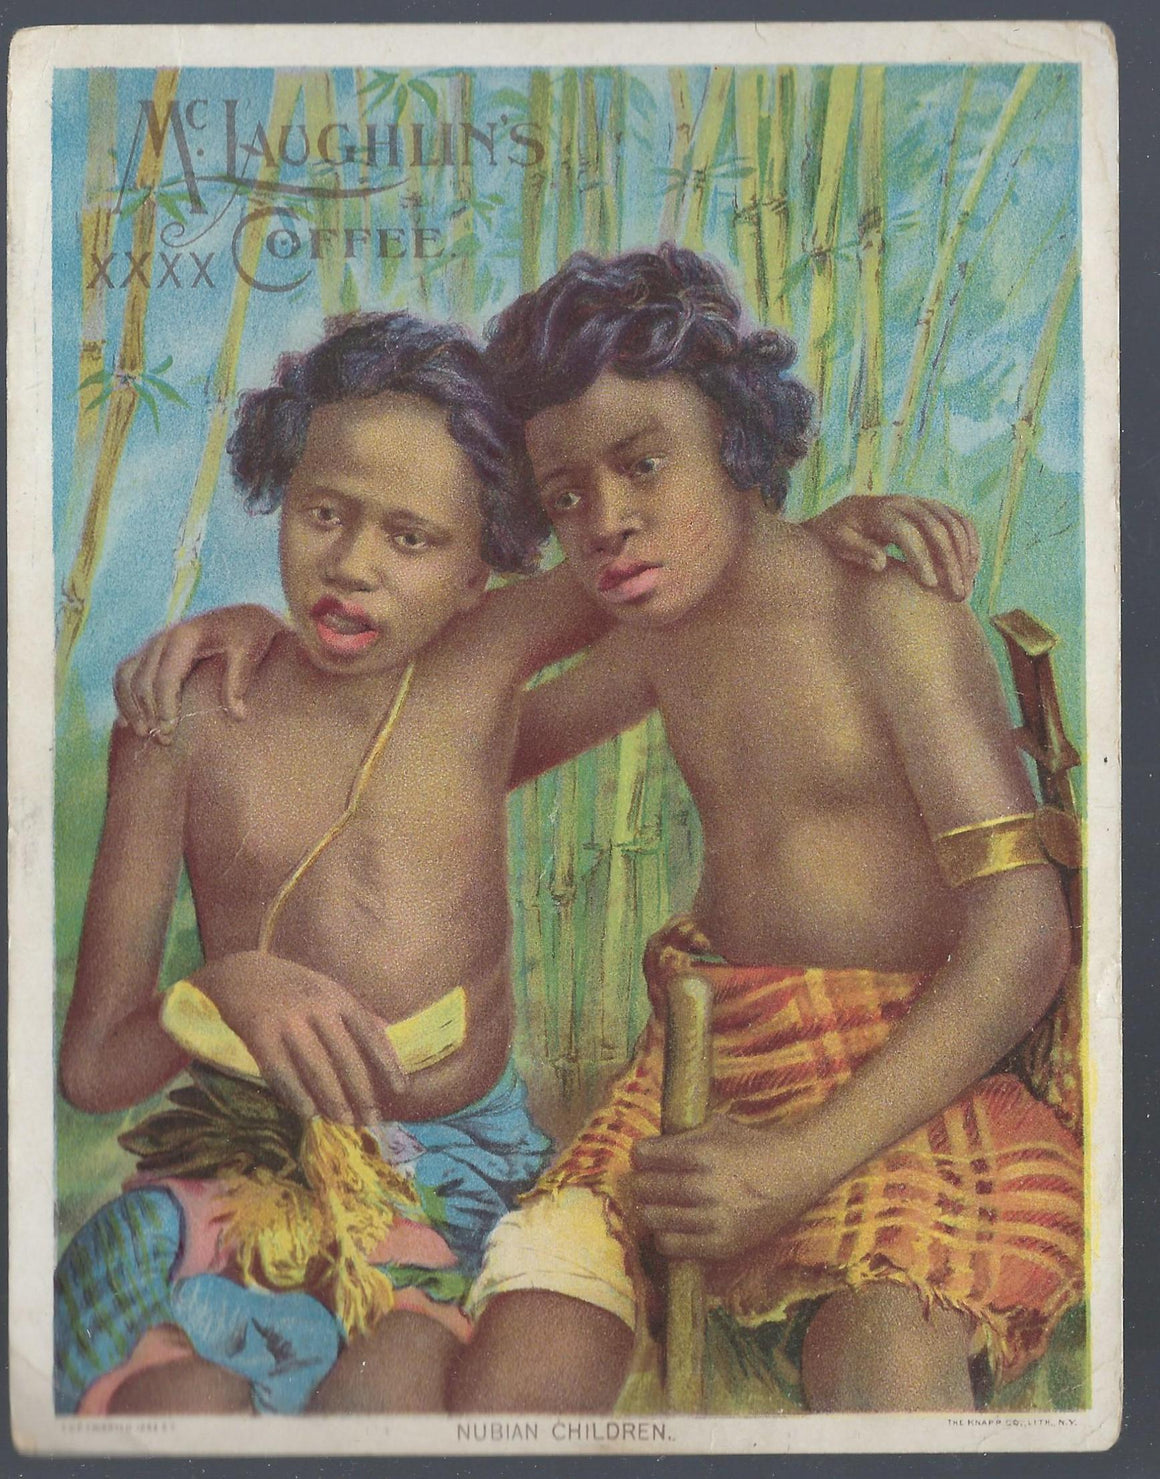 Black Americana Advertising Trade Card McLaughlin Coffee Nubian Children